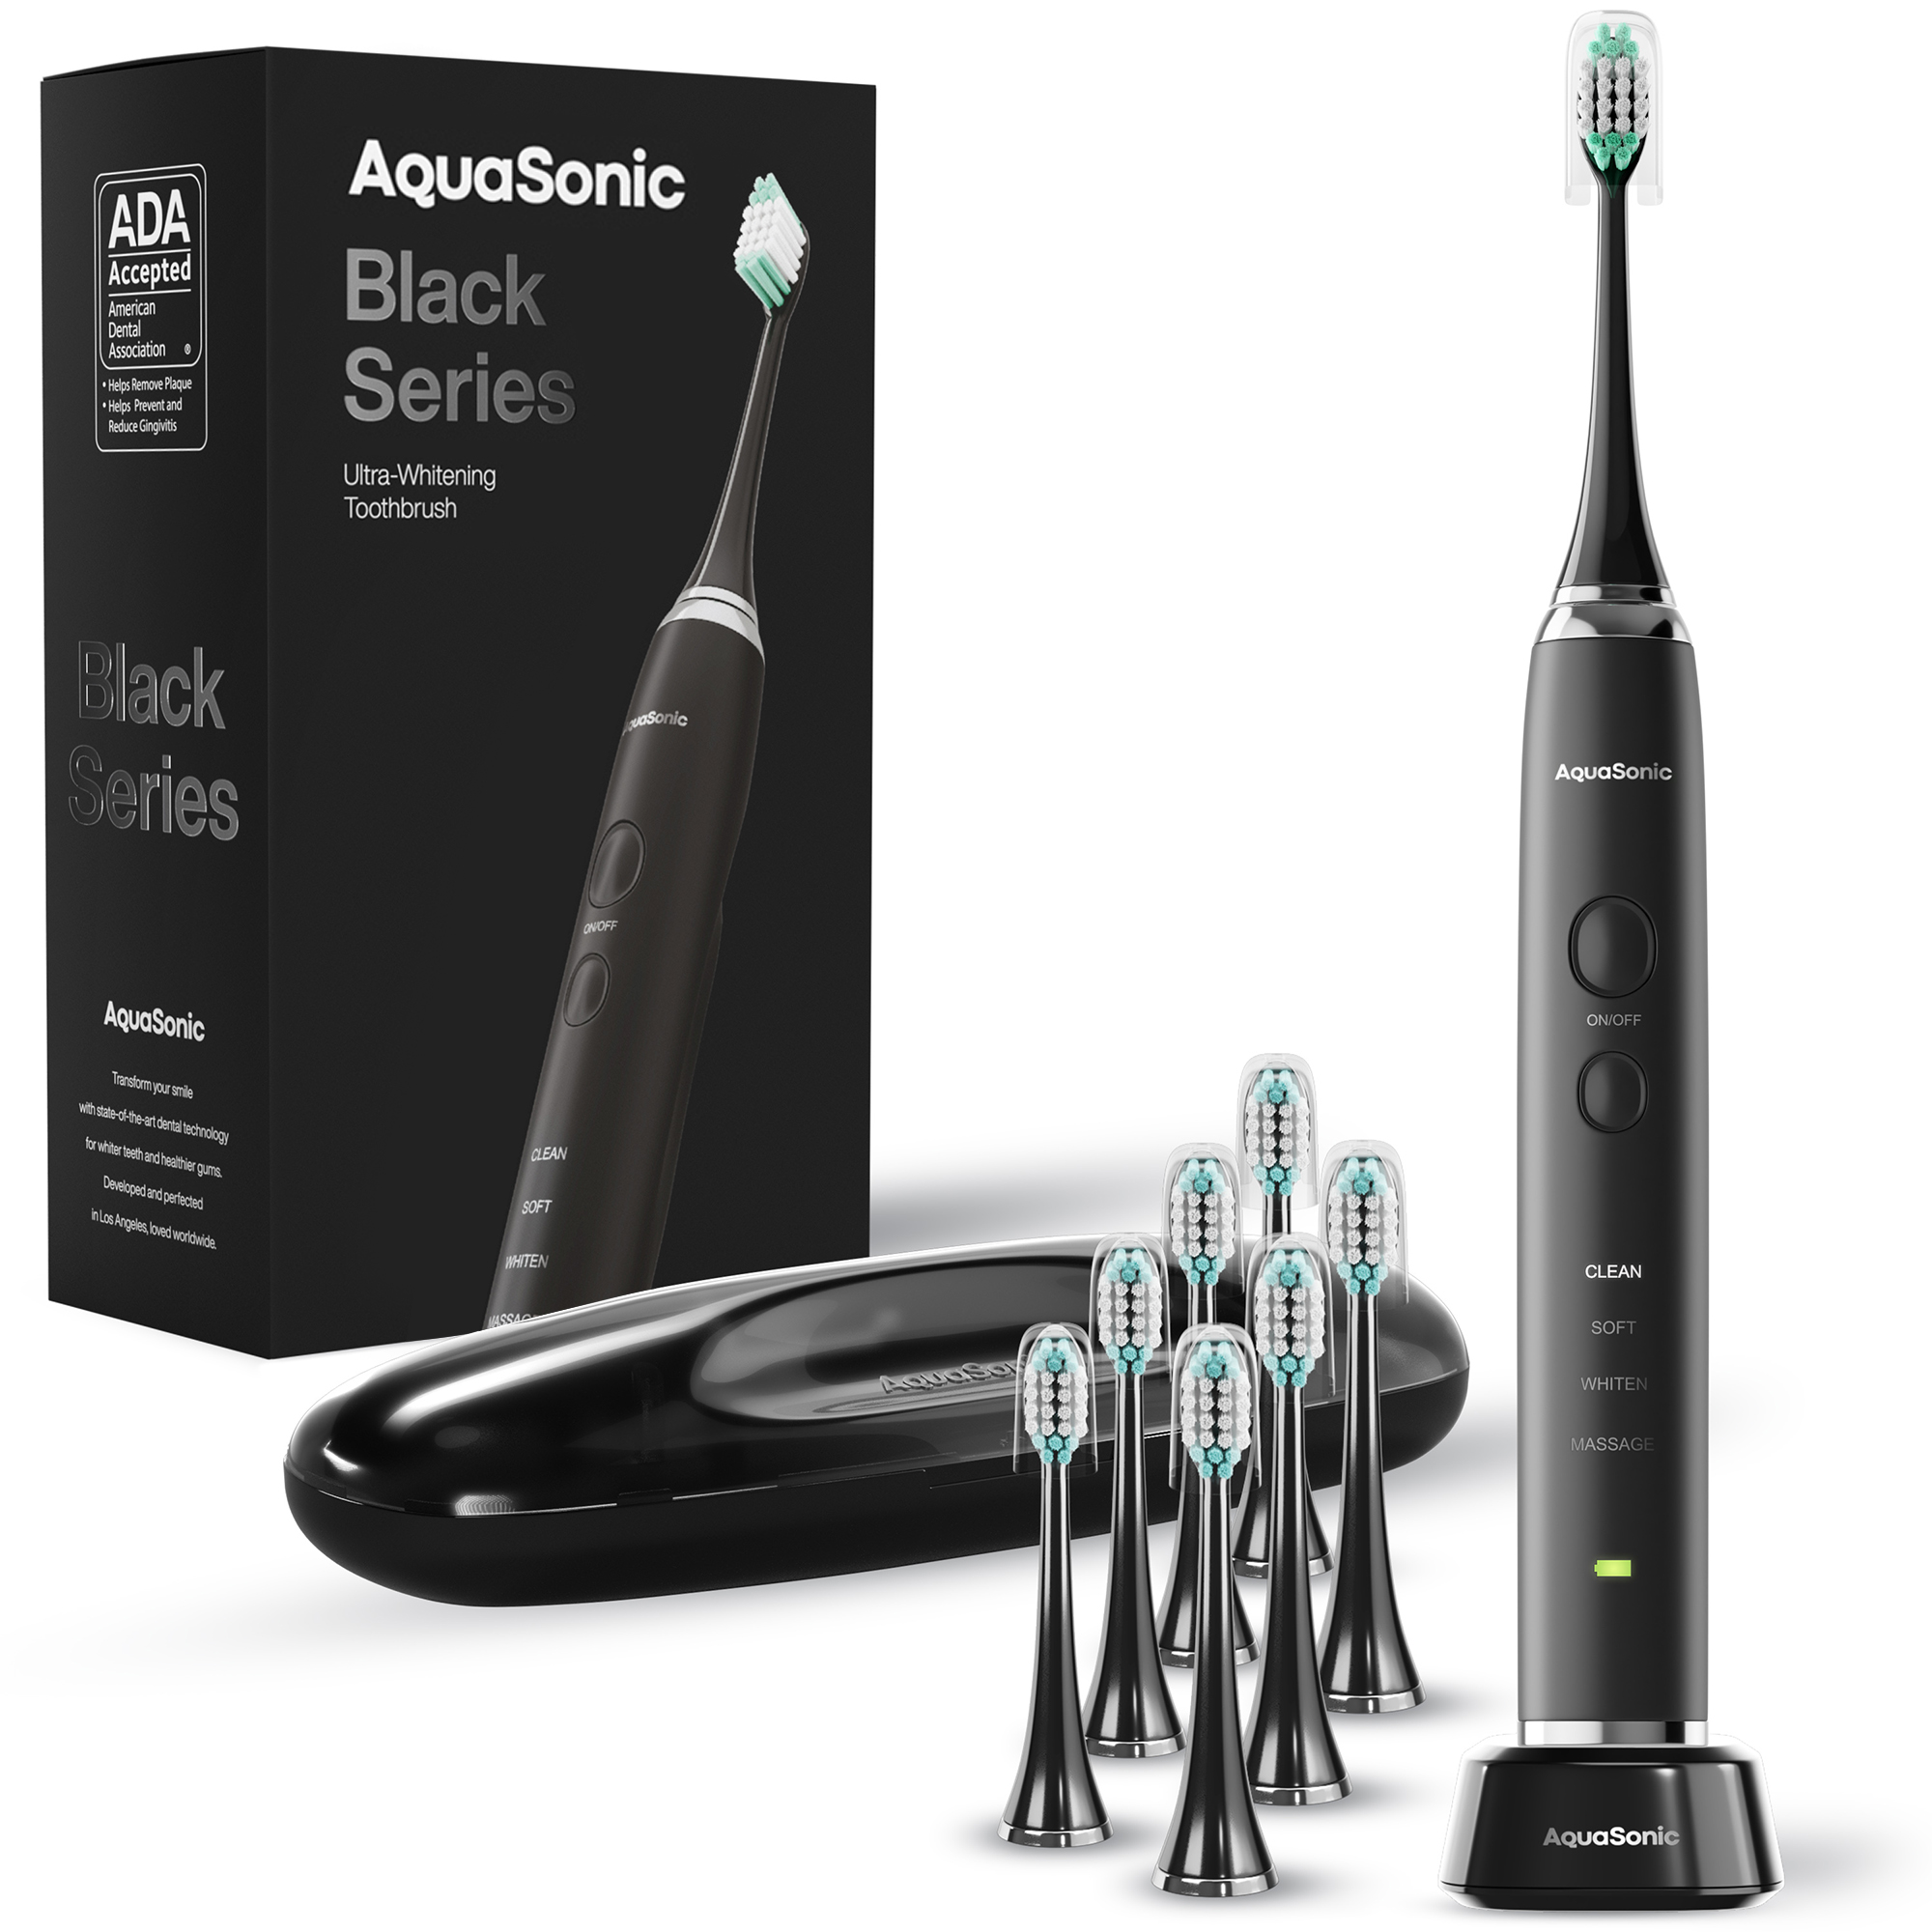 Image 1: AquaSonic Toothbrush